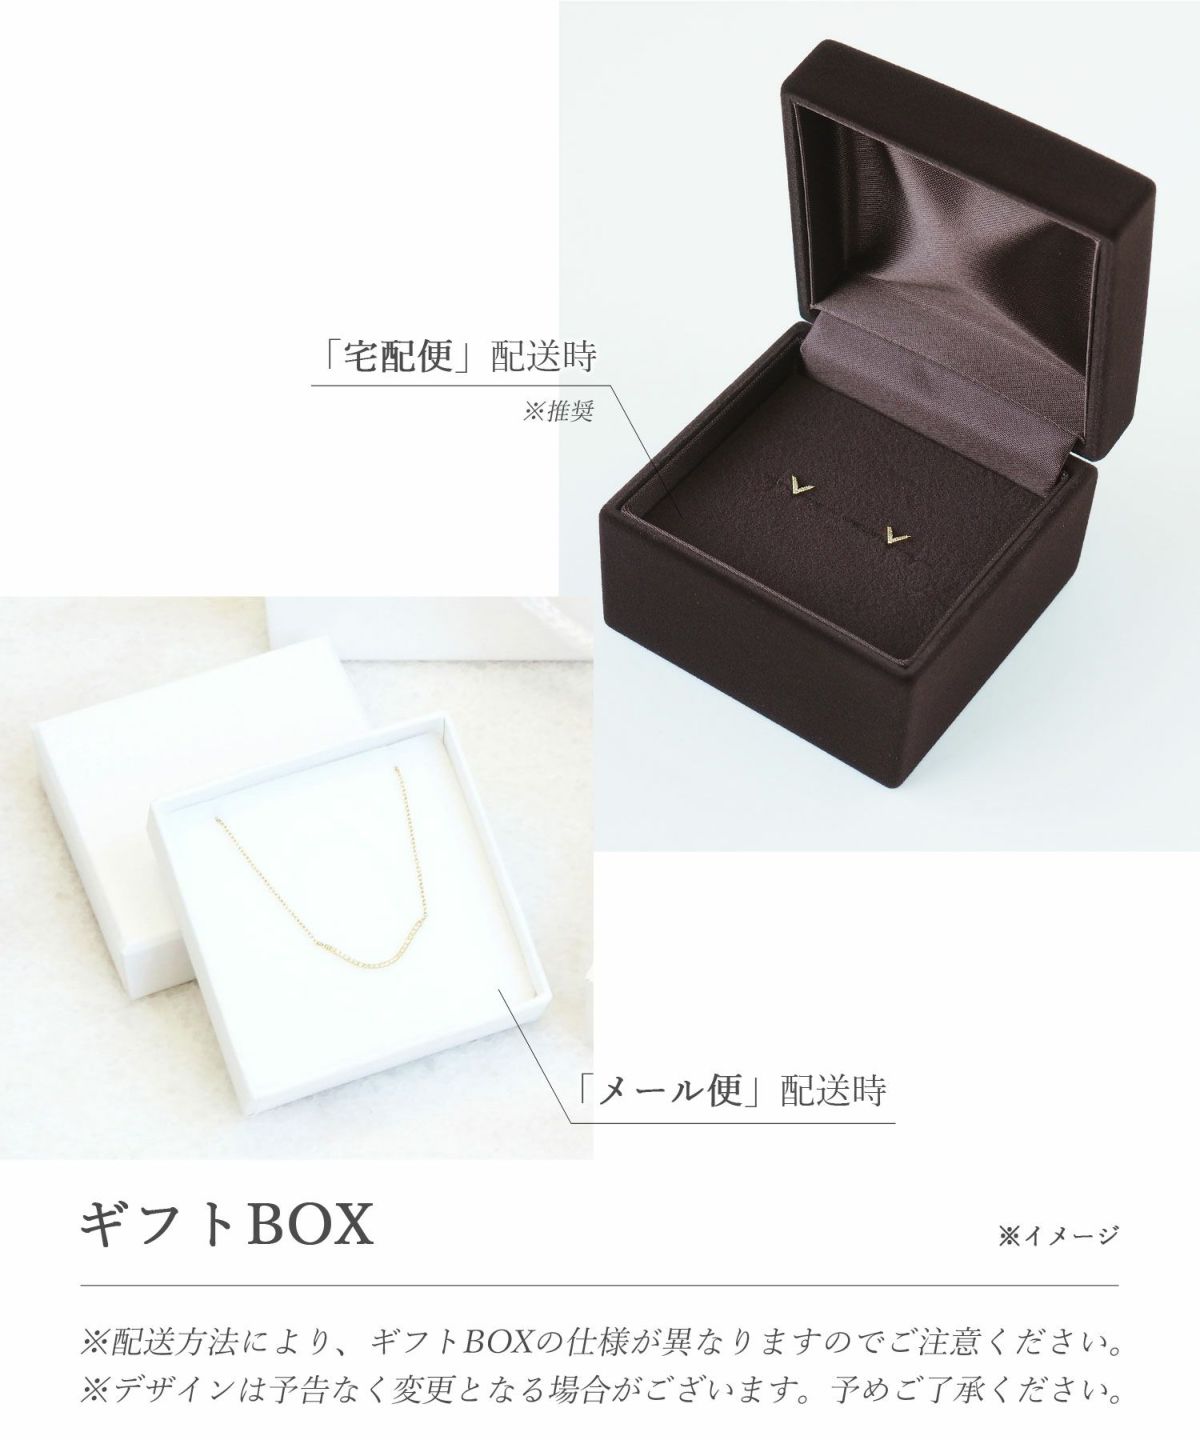 K10スウェイジェムストーンピアス【cucia K10 Light Jewelry】